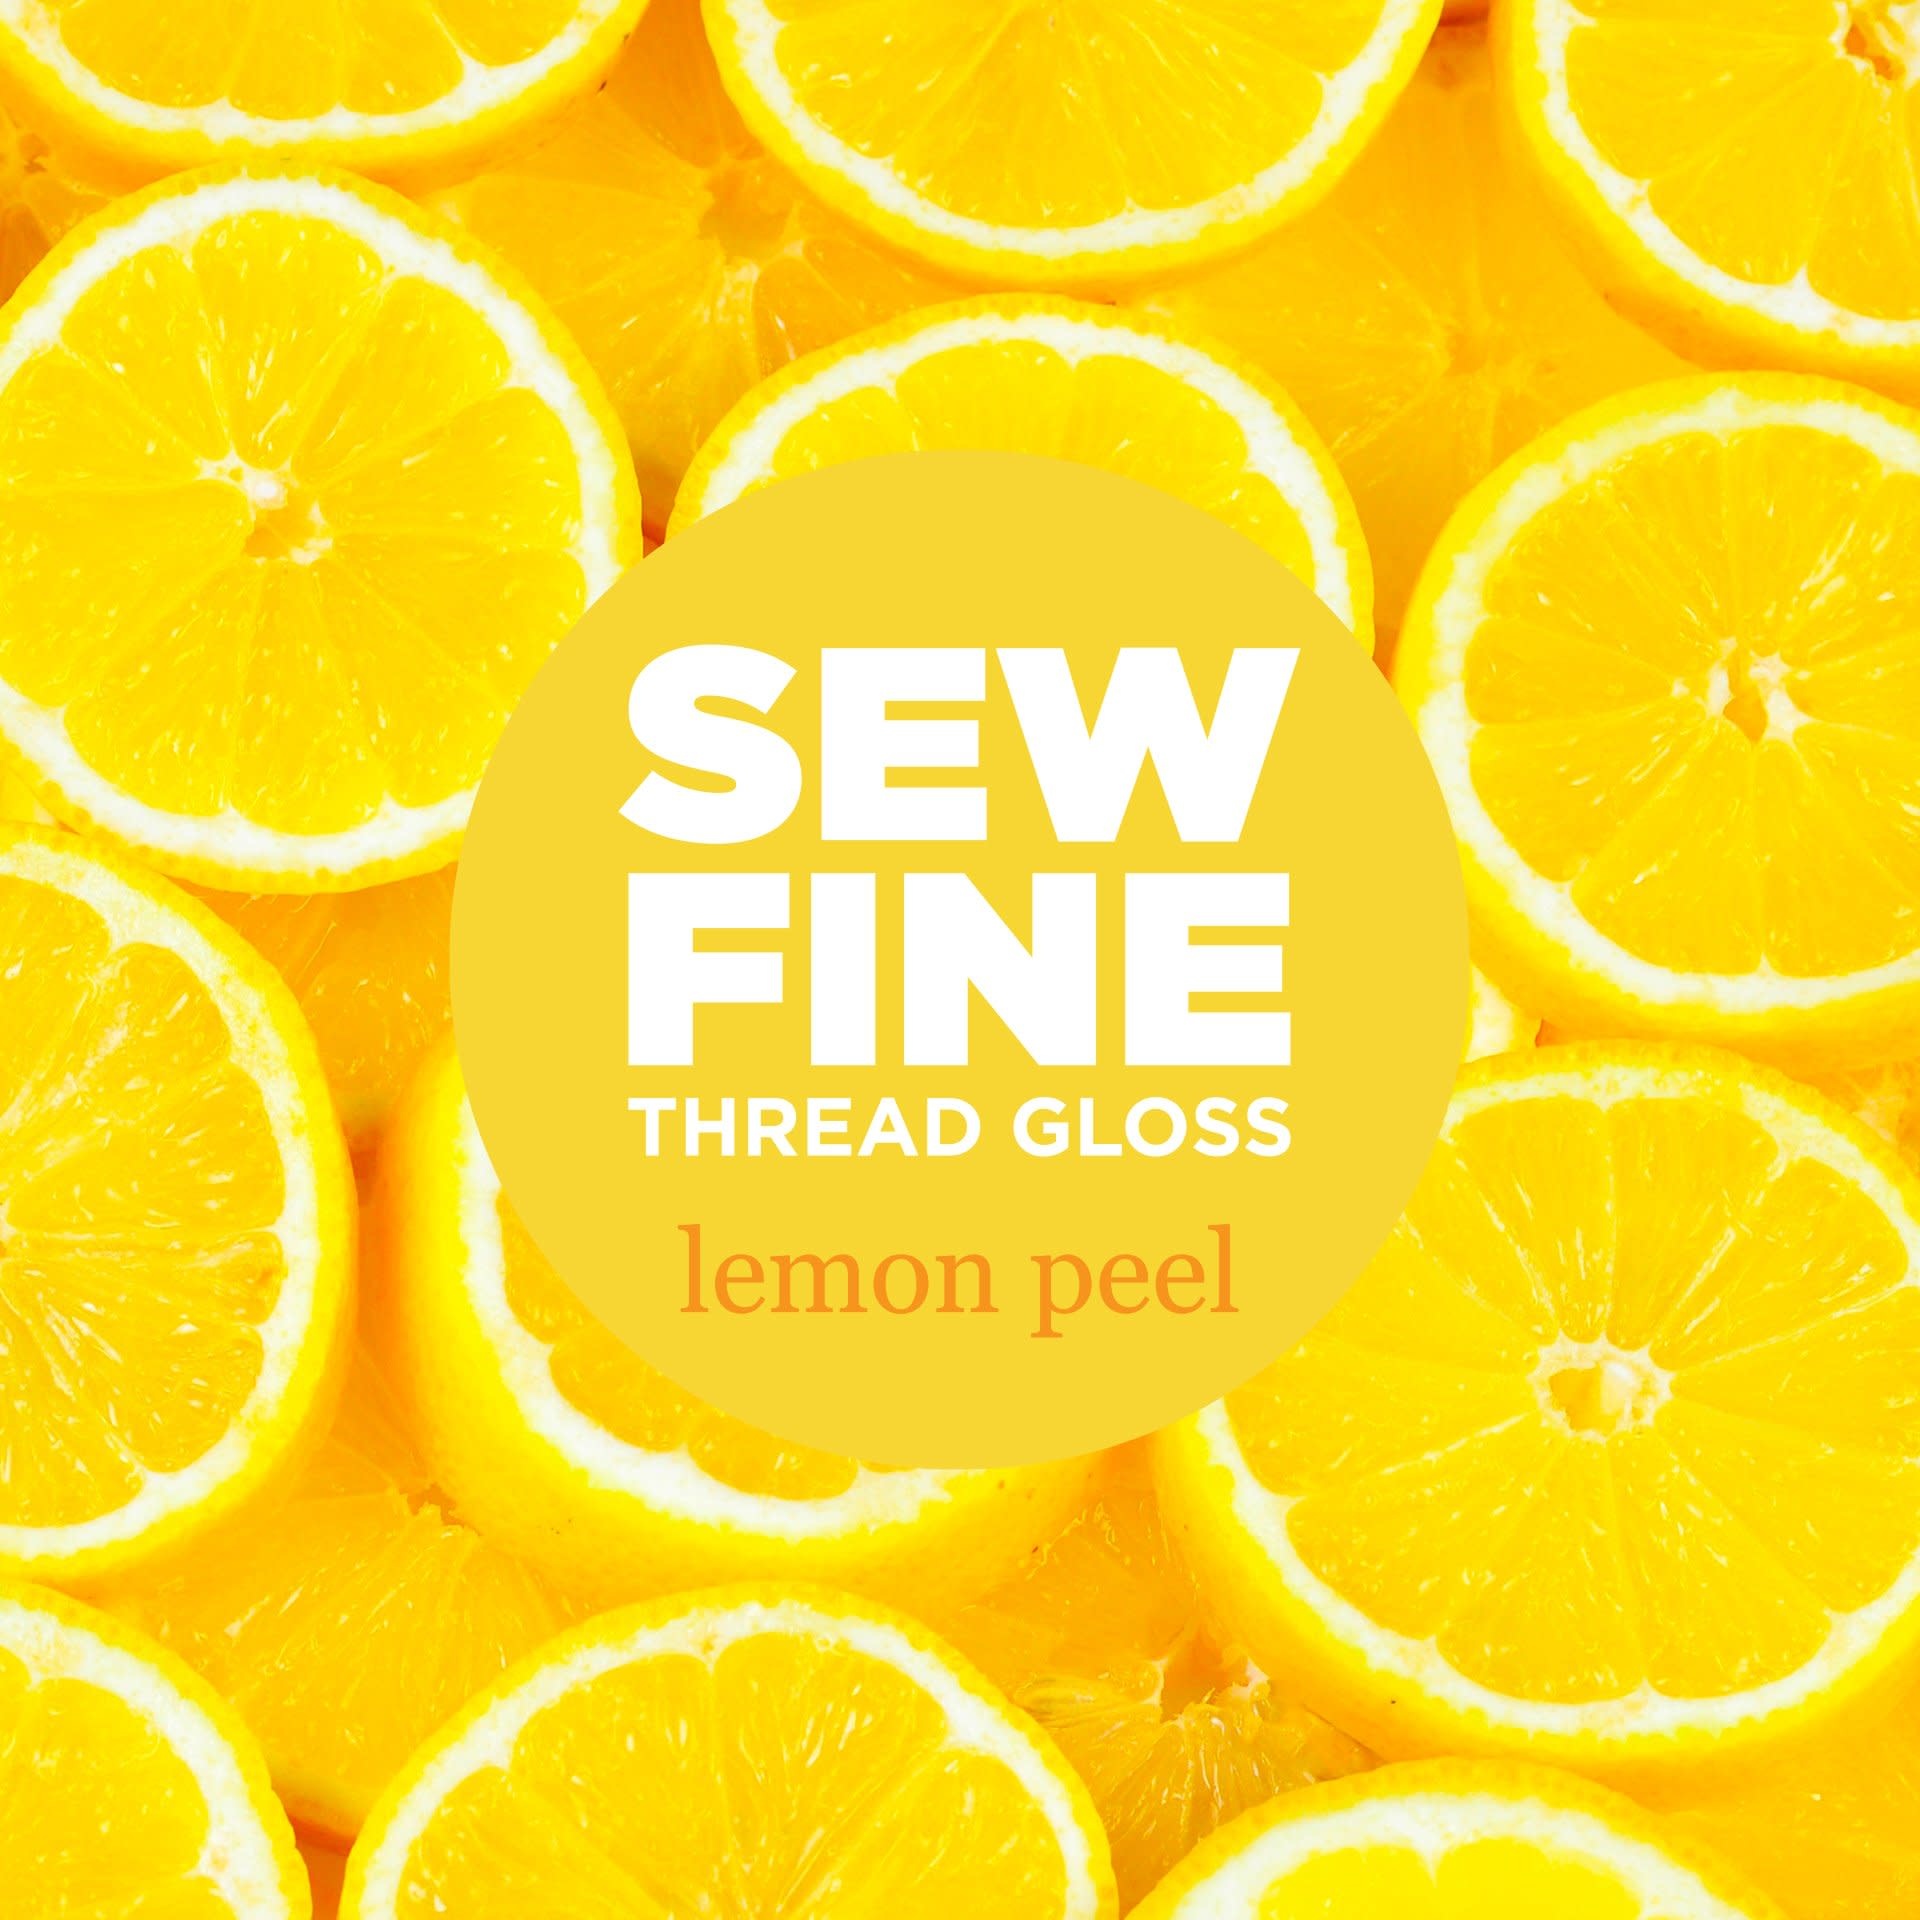 Sew Fine Sew Fine Thread Gloss: Lemon Peel 0.5 oz